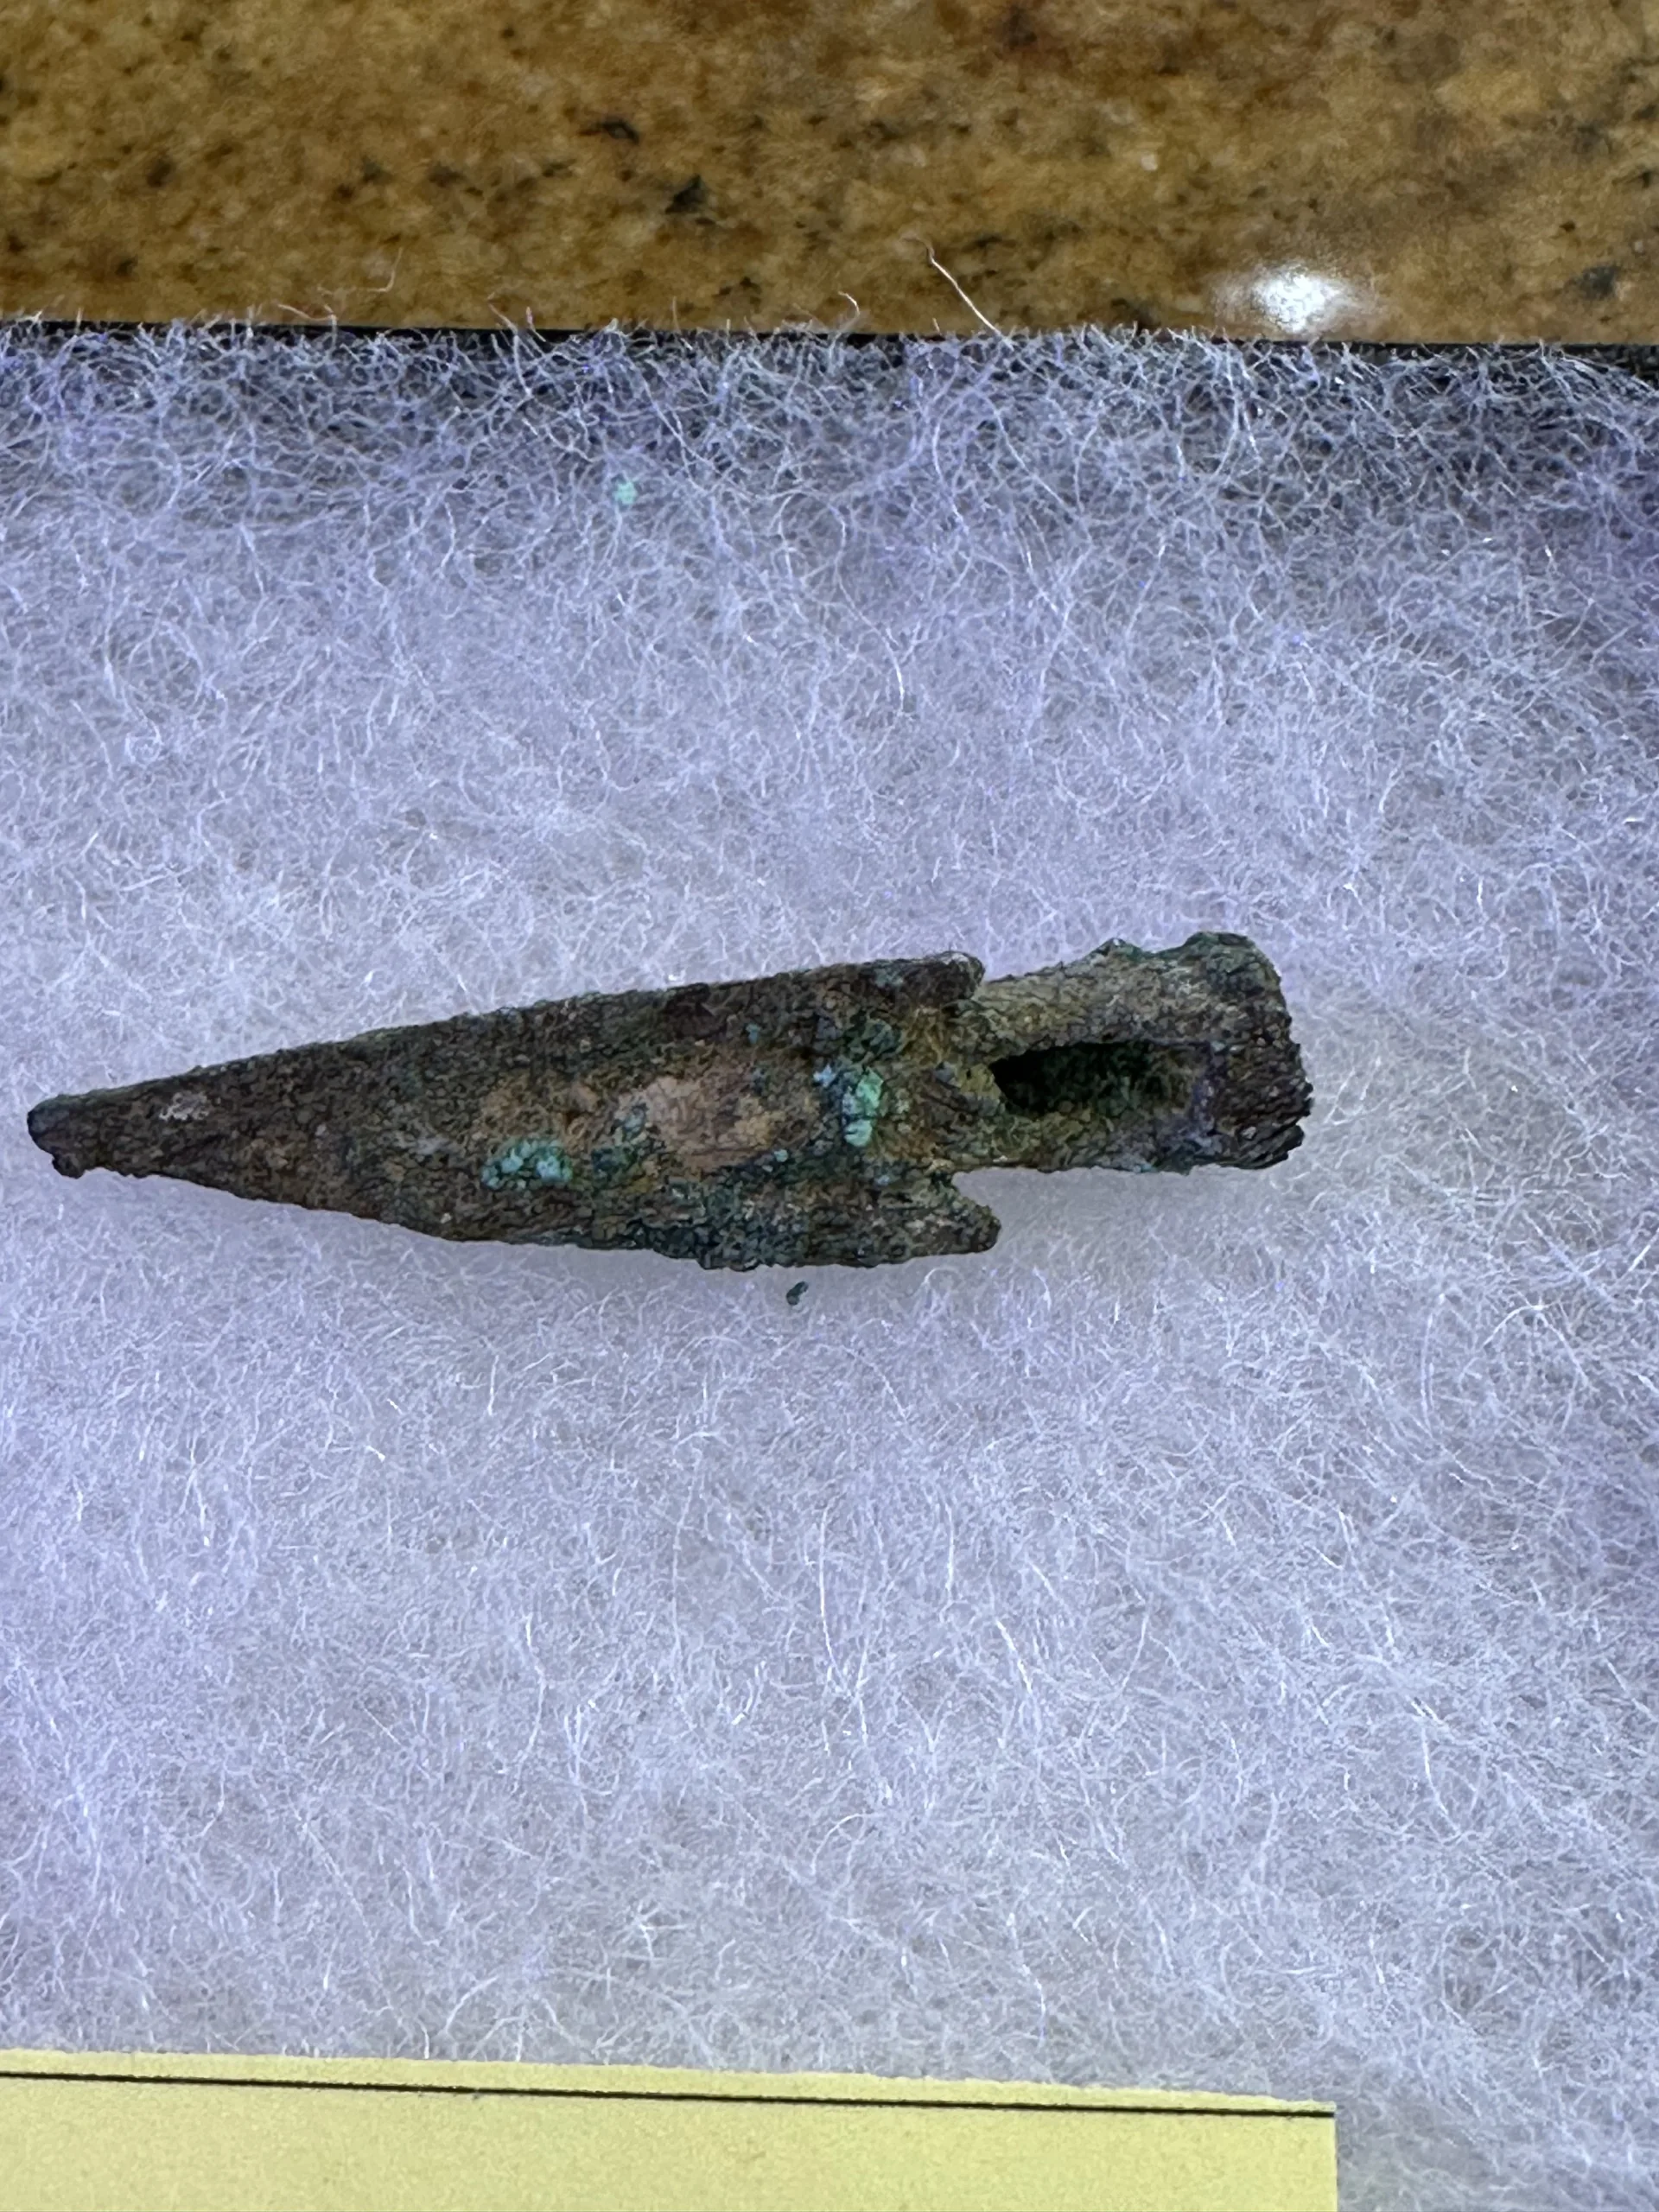 Bronze Roman Arrowhead, 100-300AD, 1 1/2 inches Prehistoric Online